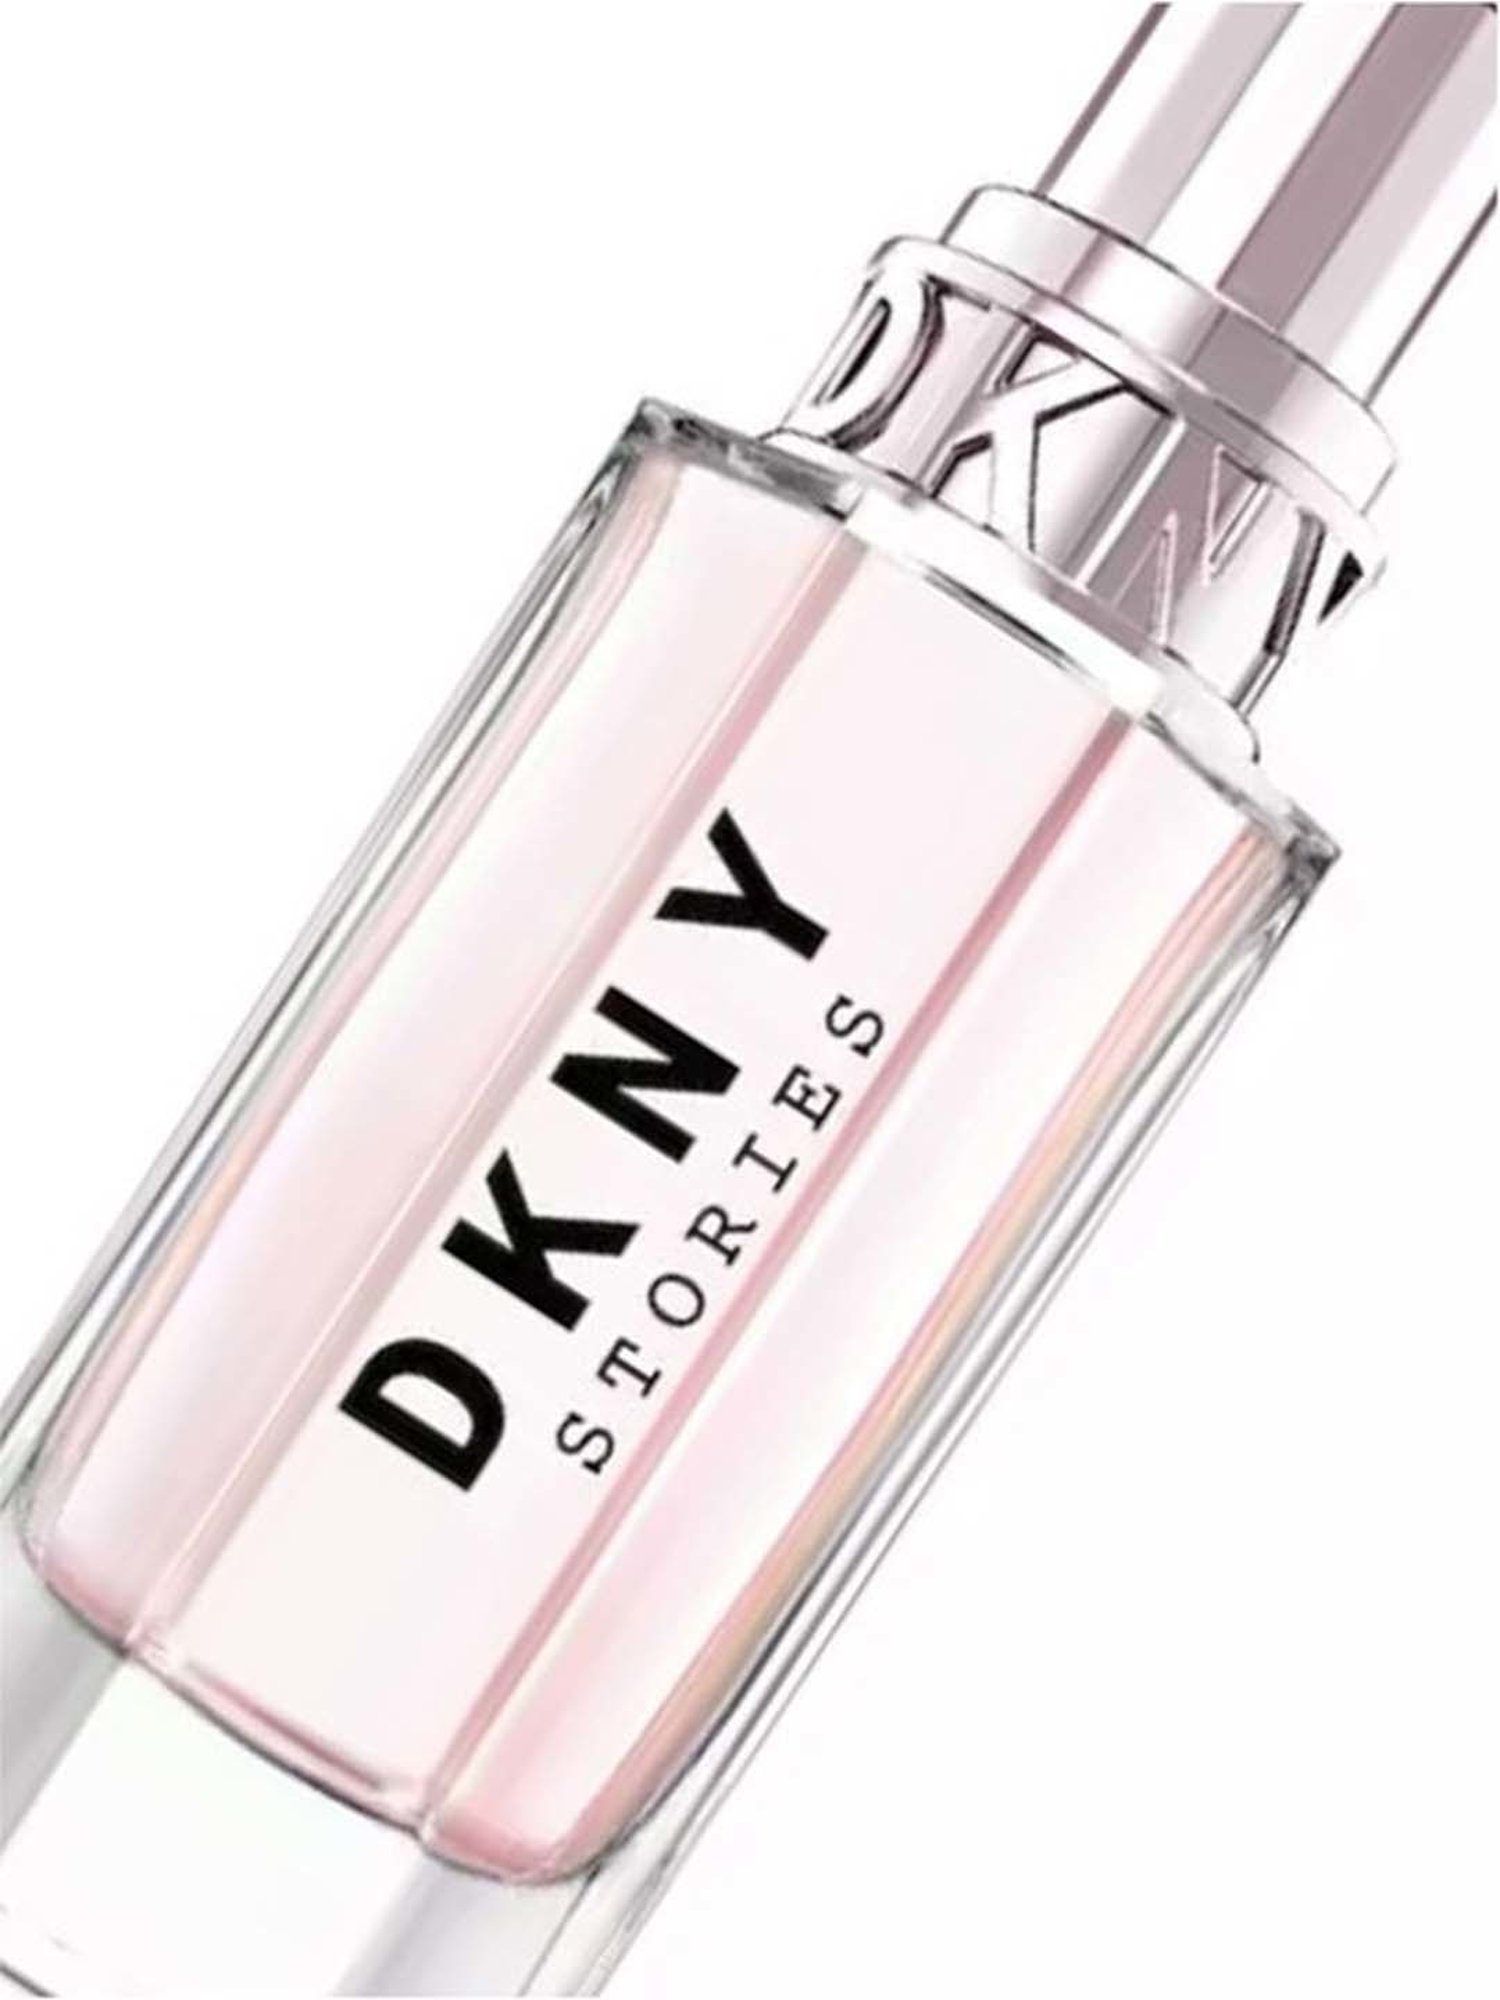 Alternative DKNY Stories perfume for women - Taj perfume - TAJ Brand